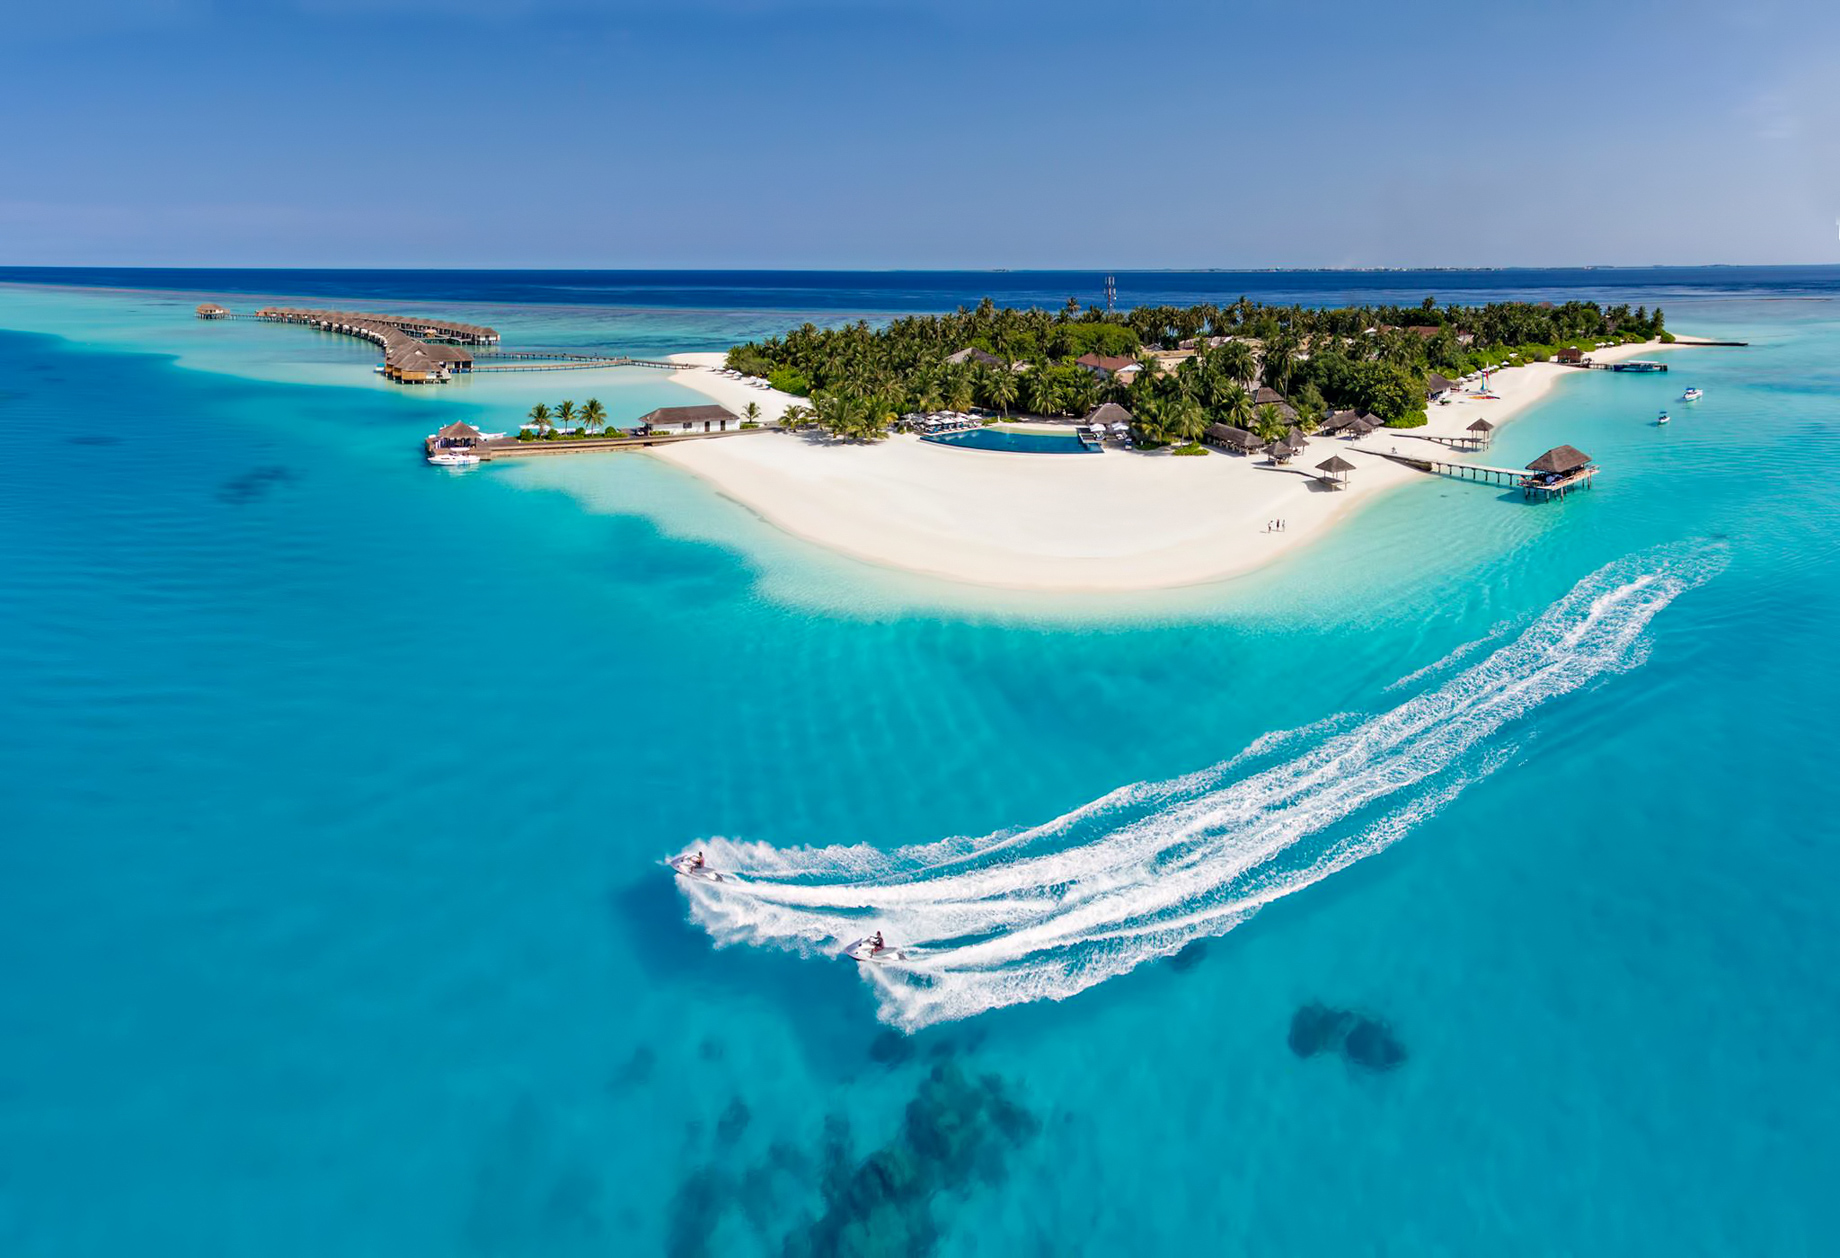 Velassaru Maldives Resort – South Male Atoll, Maldives – Jet Skis